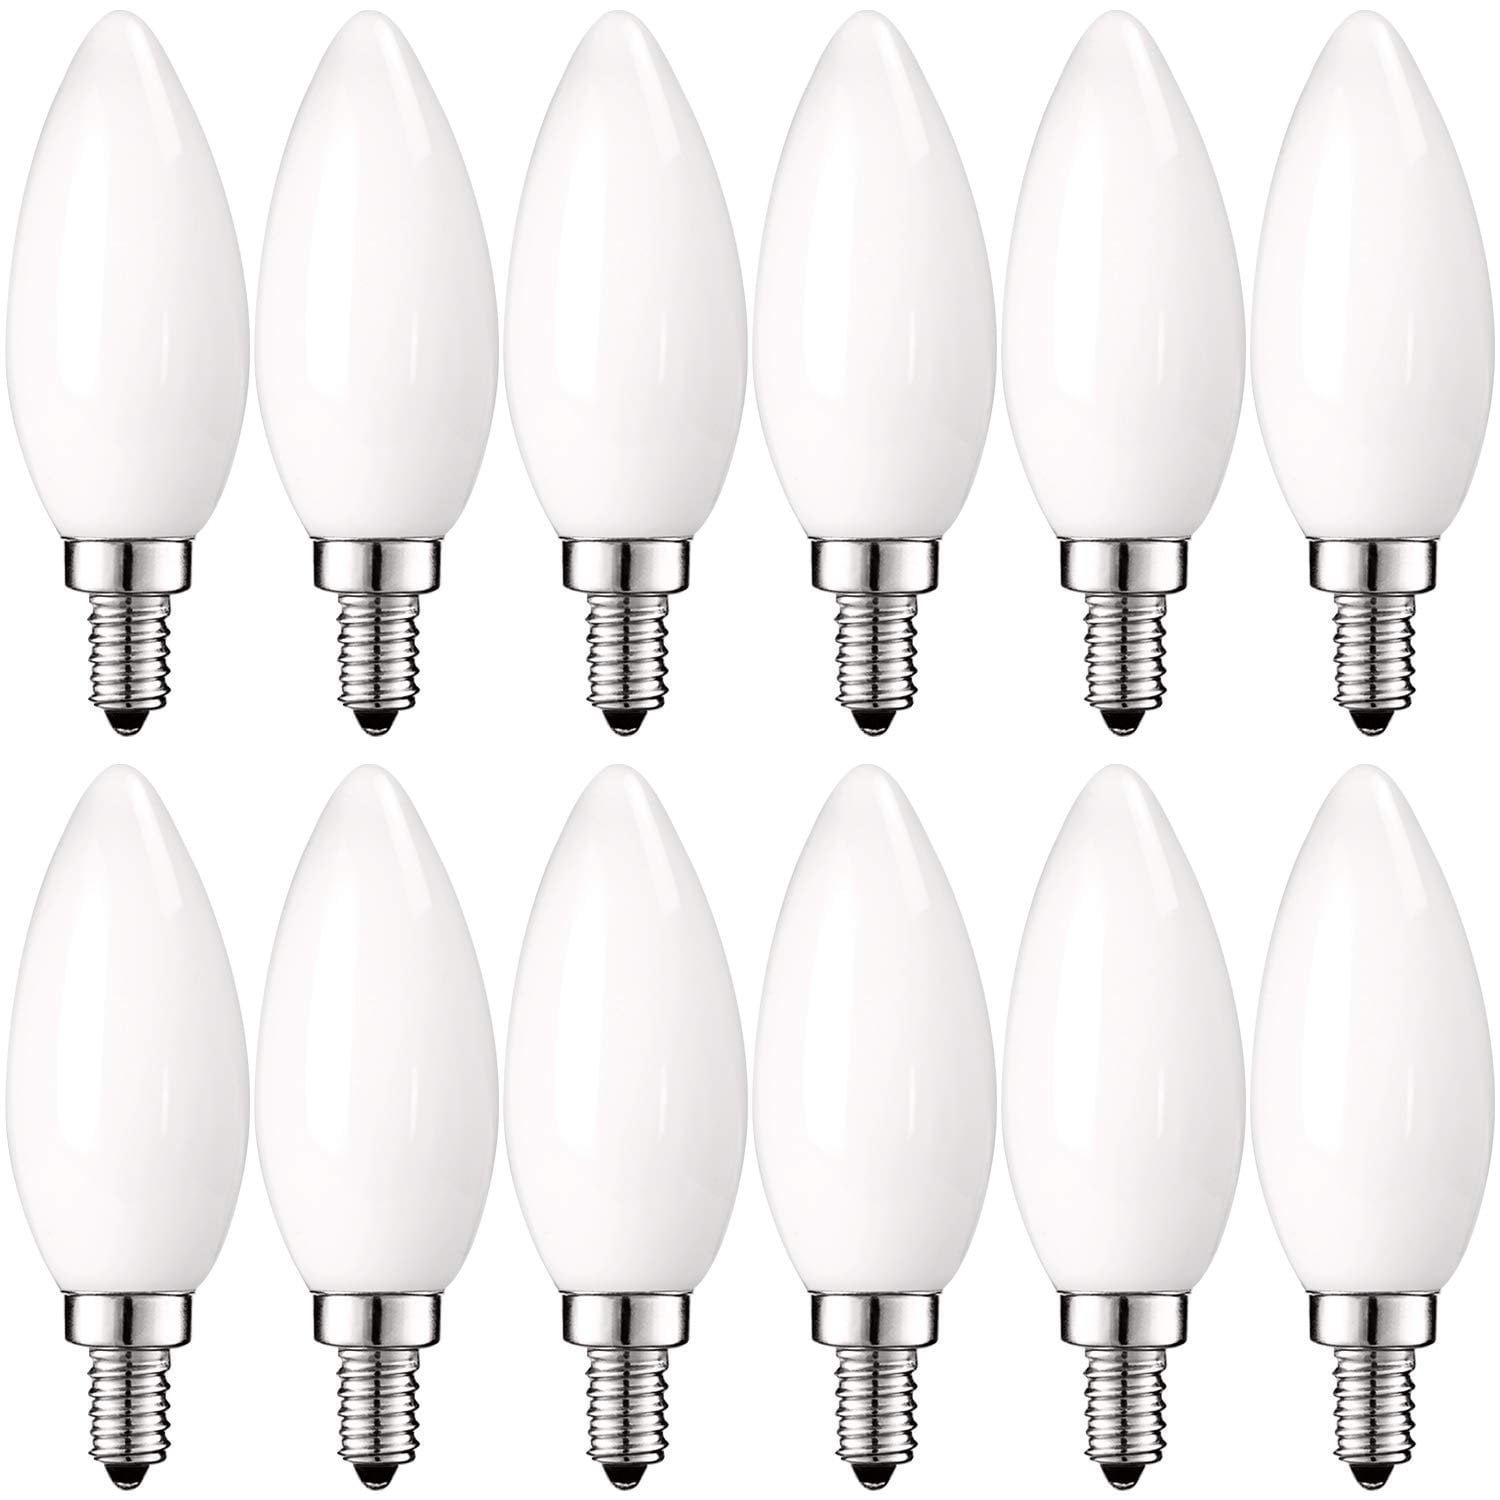 Dimmable Candelabra LED Light Bulbs: 2 Watt 6 Pack E12 LED Bulb Base 2700K Warm White 90+Ra 250 Lumen Indoor or Outdoor LED Candelabra Bulb Set Flame Tip UL Listed 25W Equivalent 